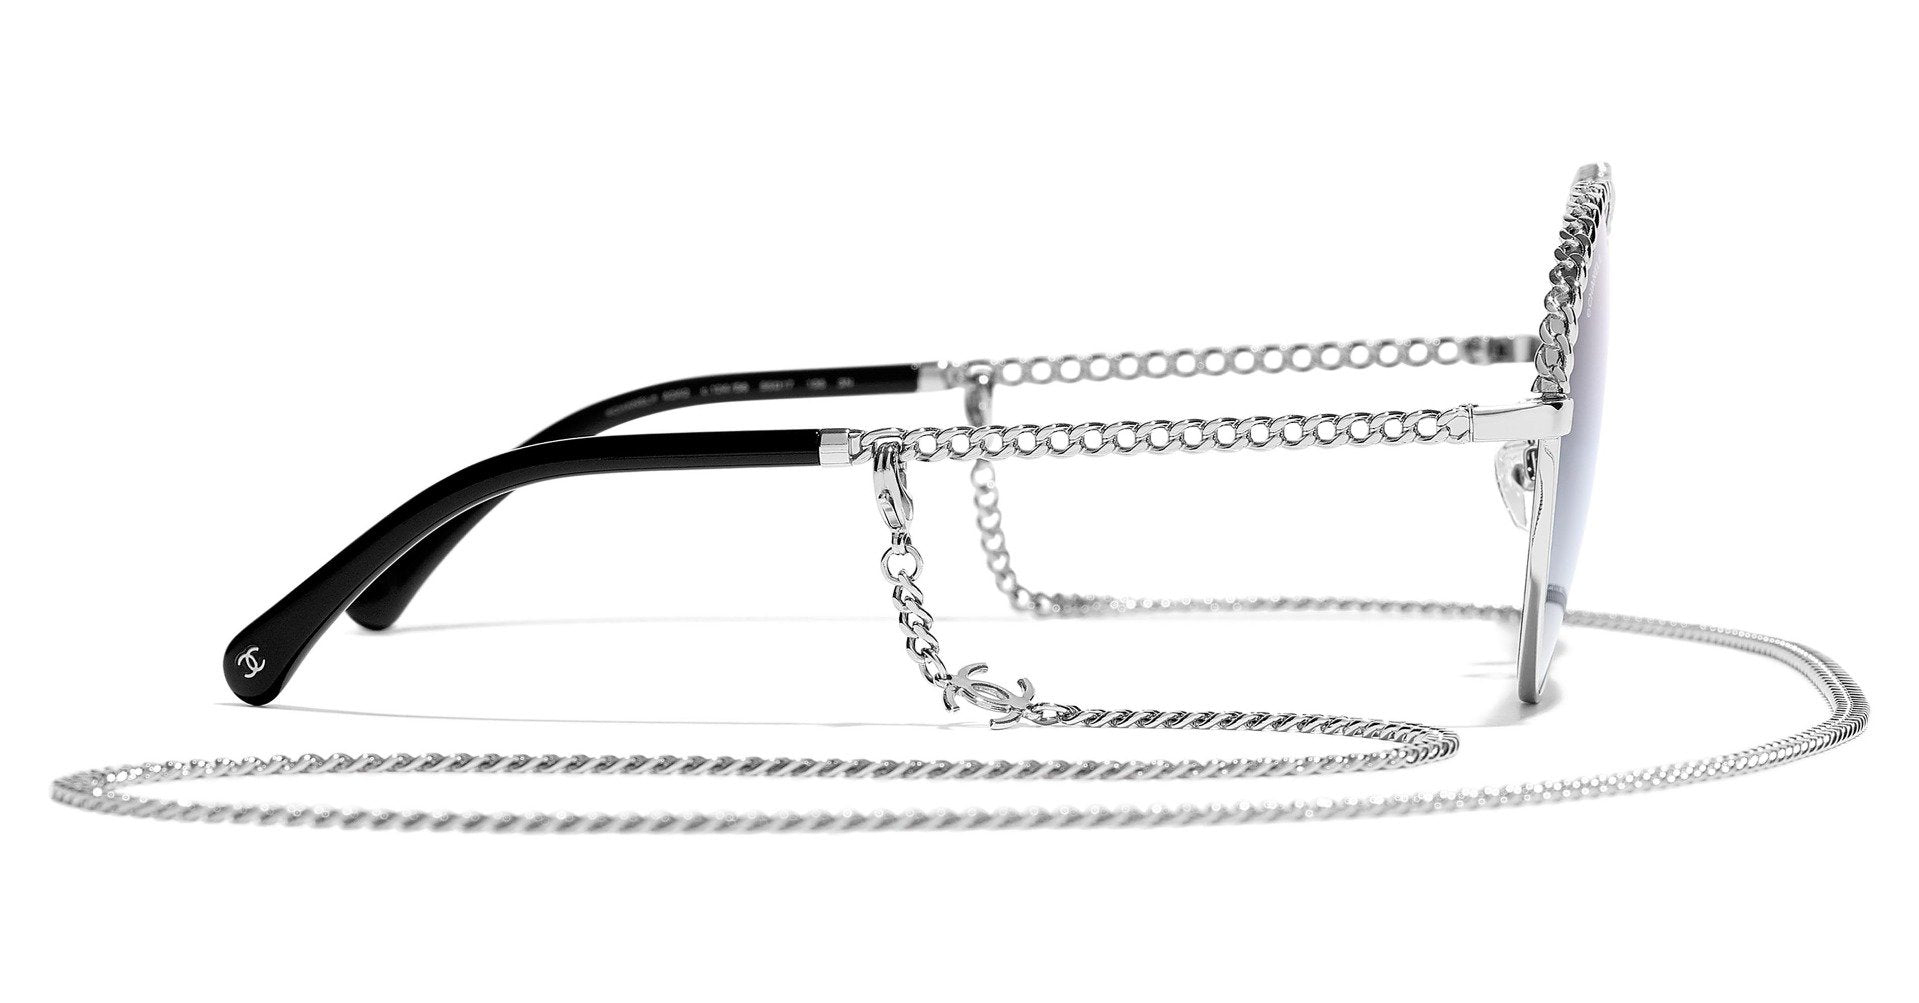 2022 Luxury Sunglasses For Women Fashion Round Summer Eyeglasses